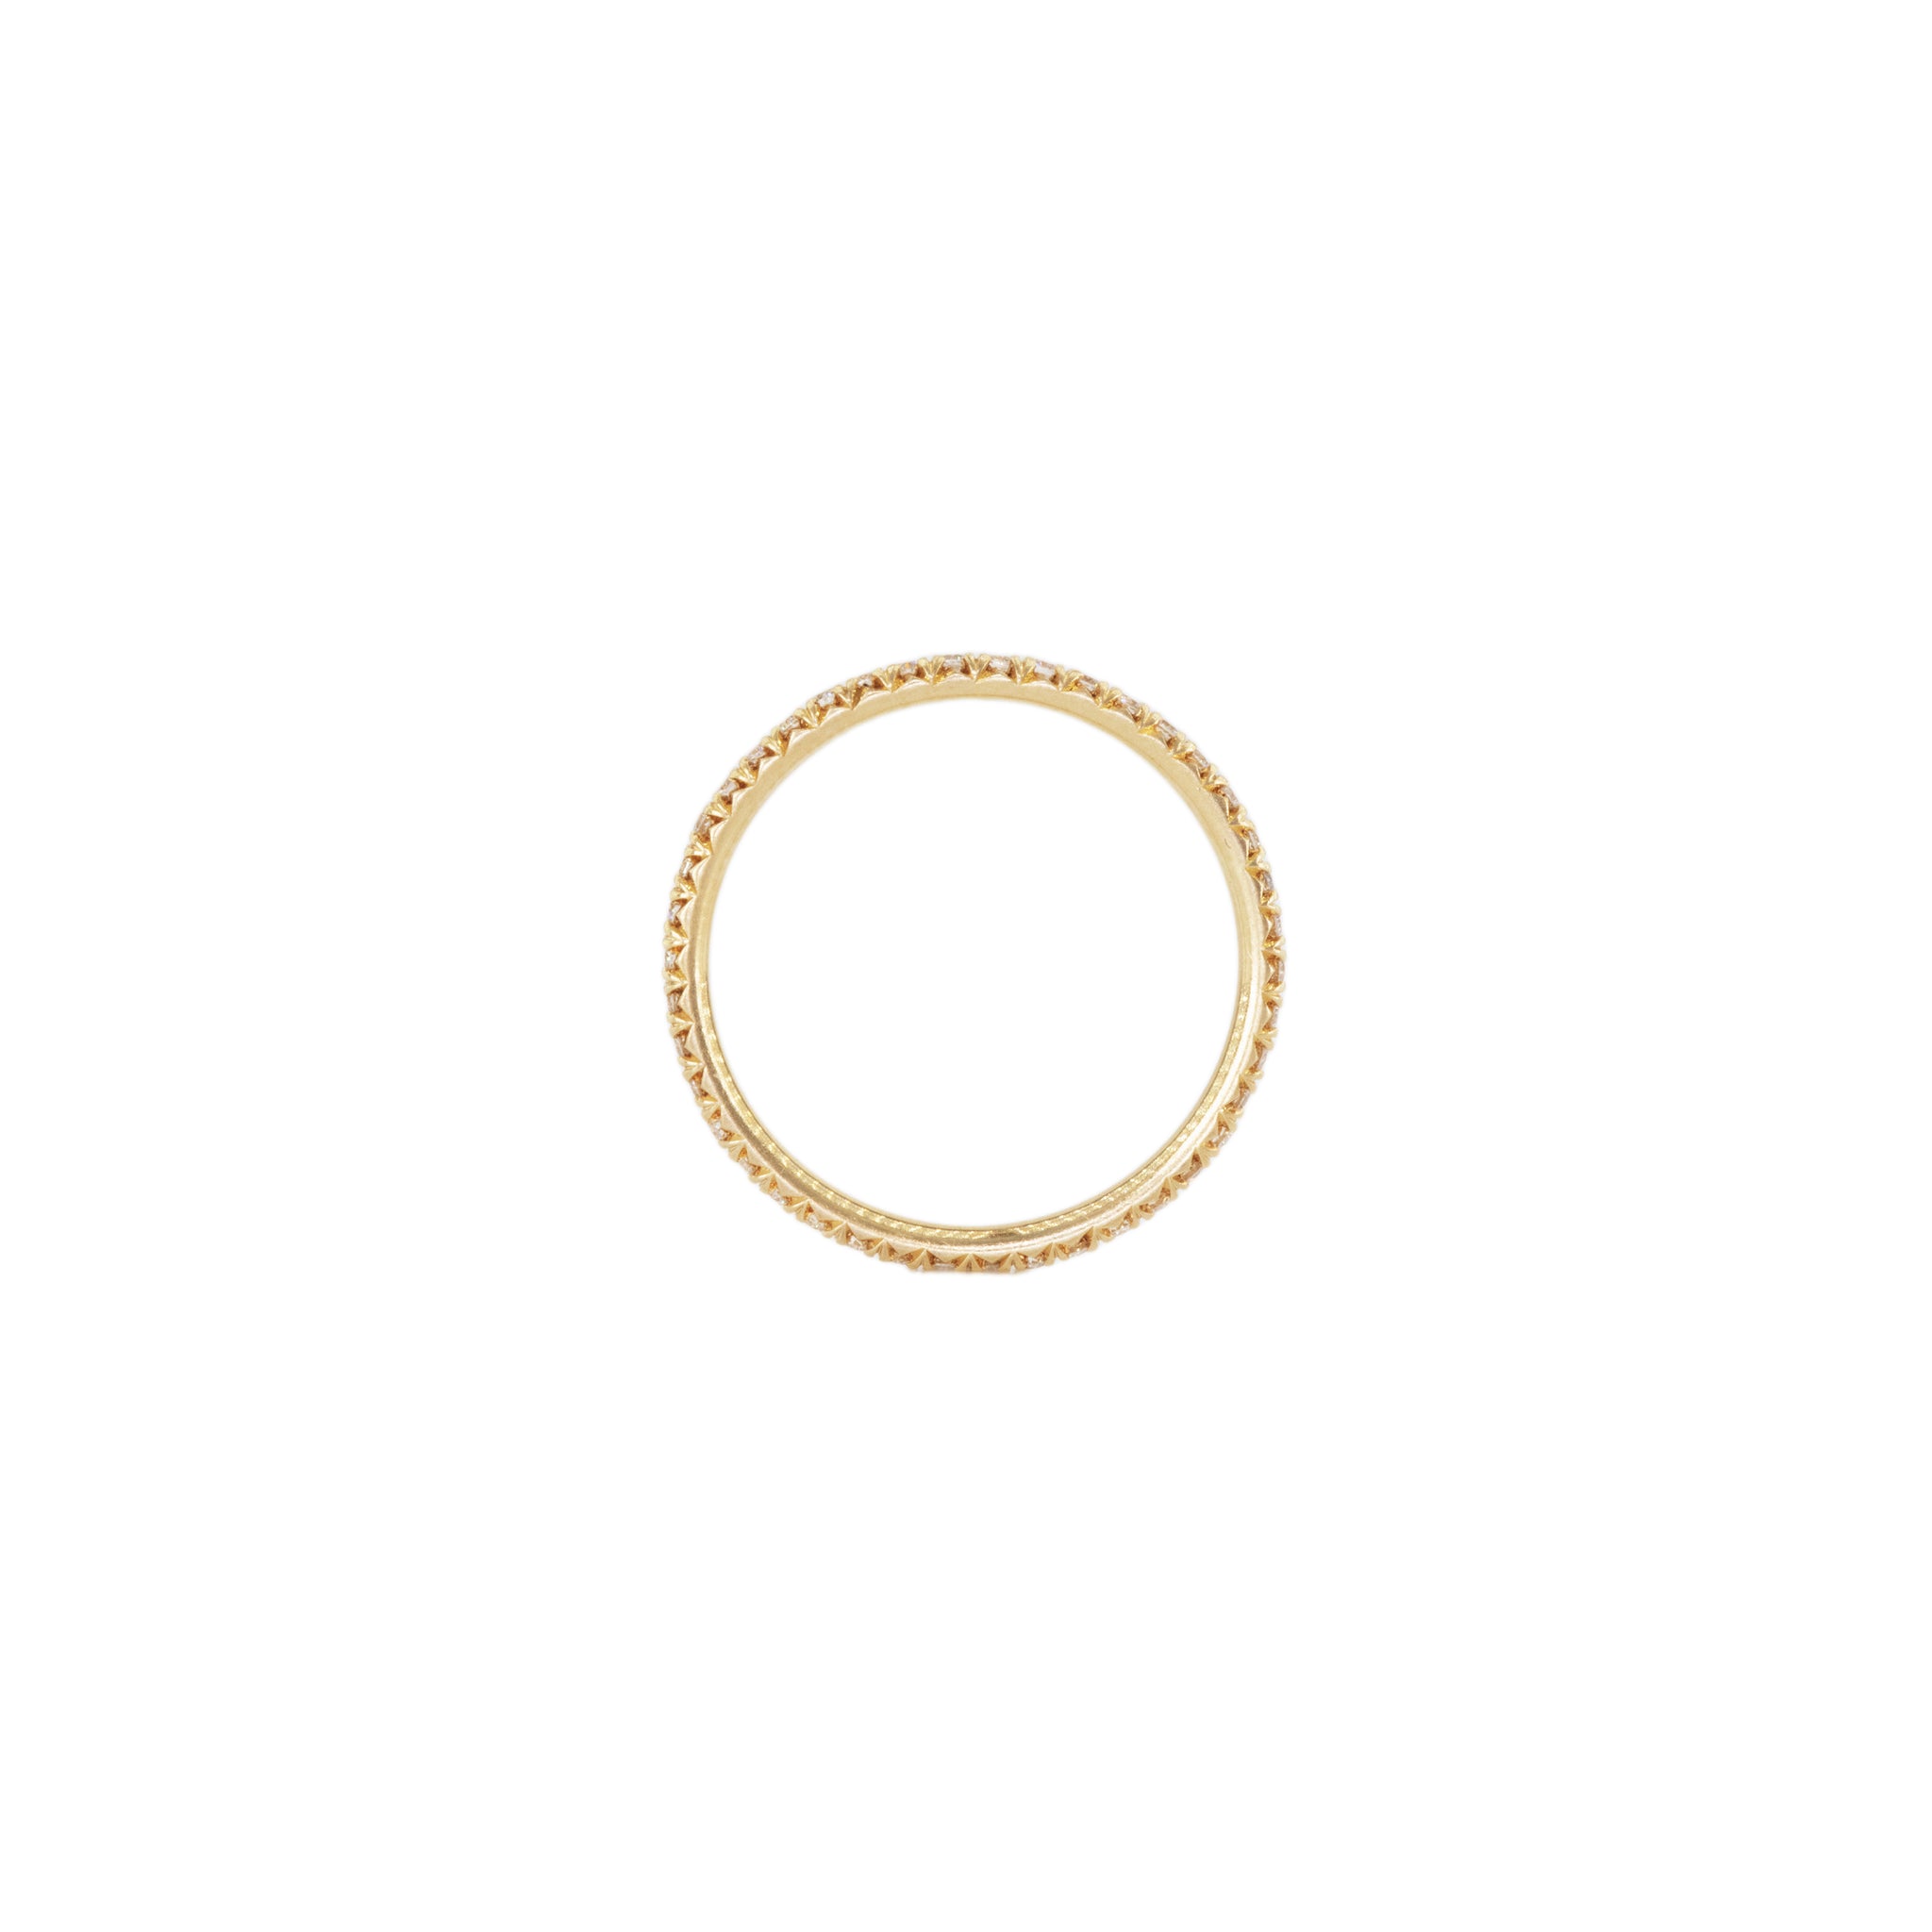 the petite ètoile d'or eternity ring